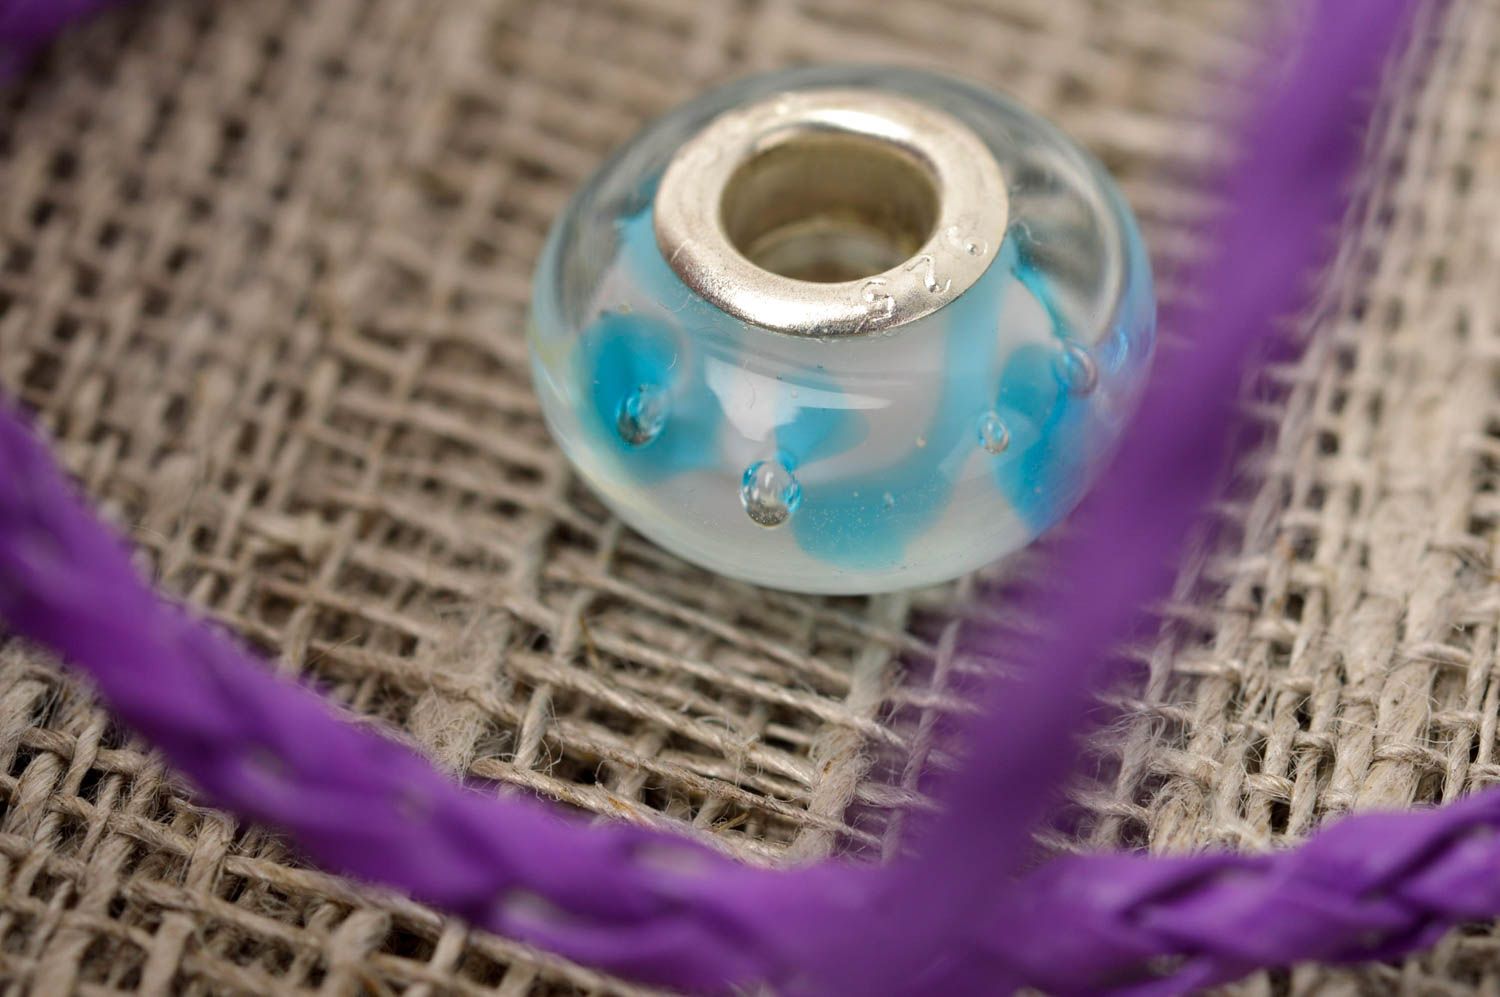 Beautiful handmade glass bead jewellery making ideas art and craft supplies photo 1